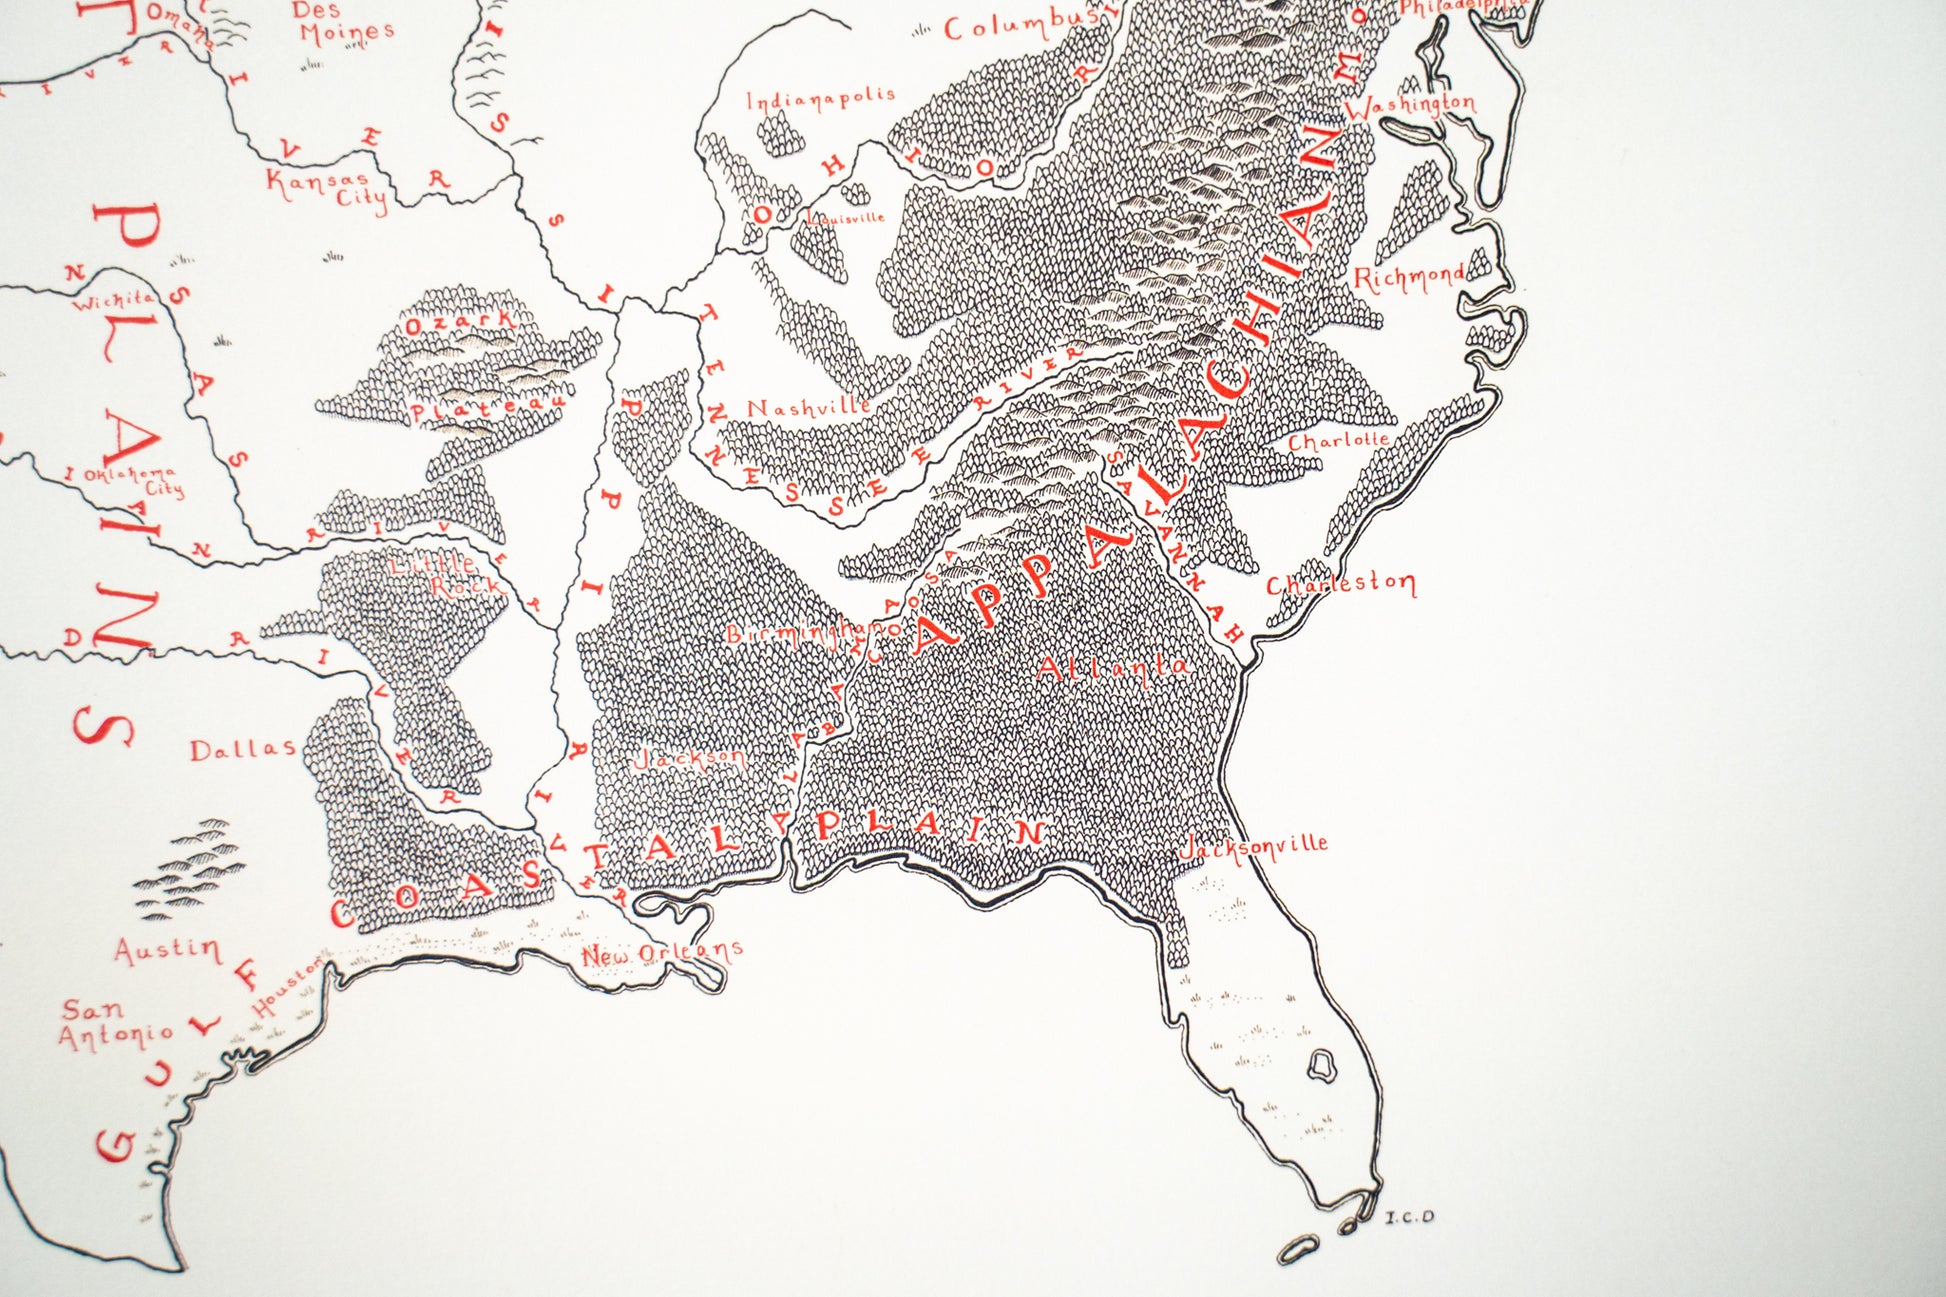 Louisiana Map – Lord of Maps